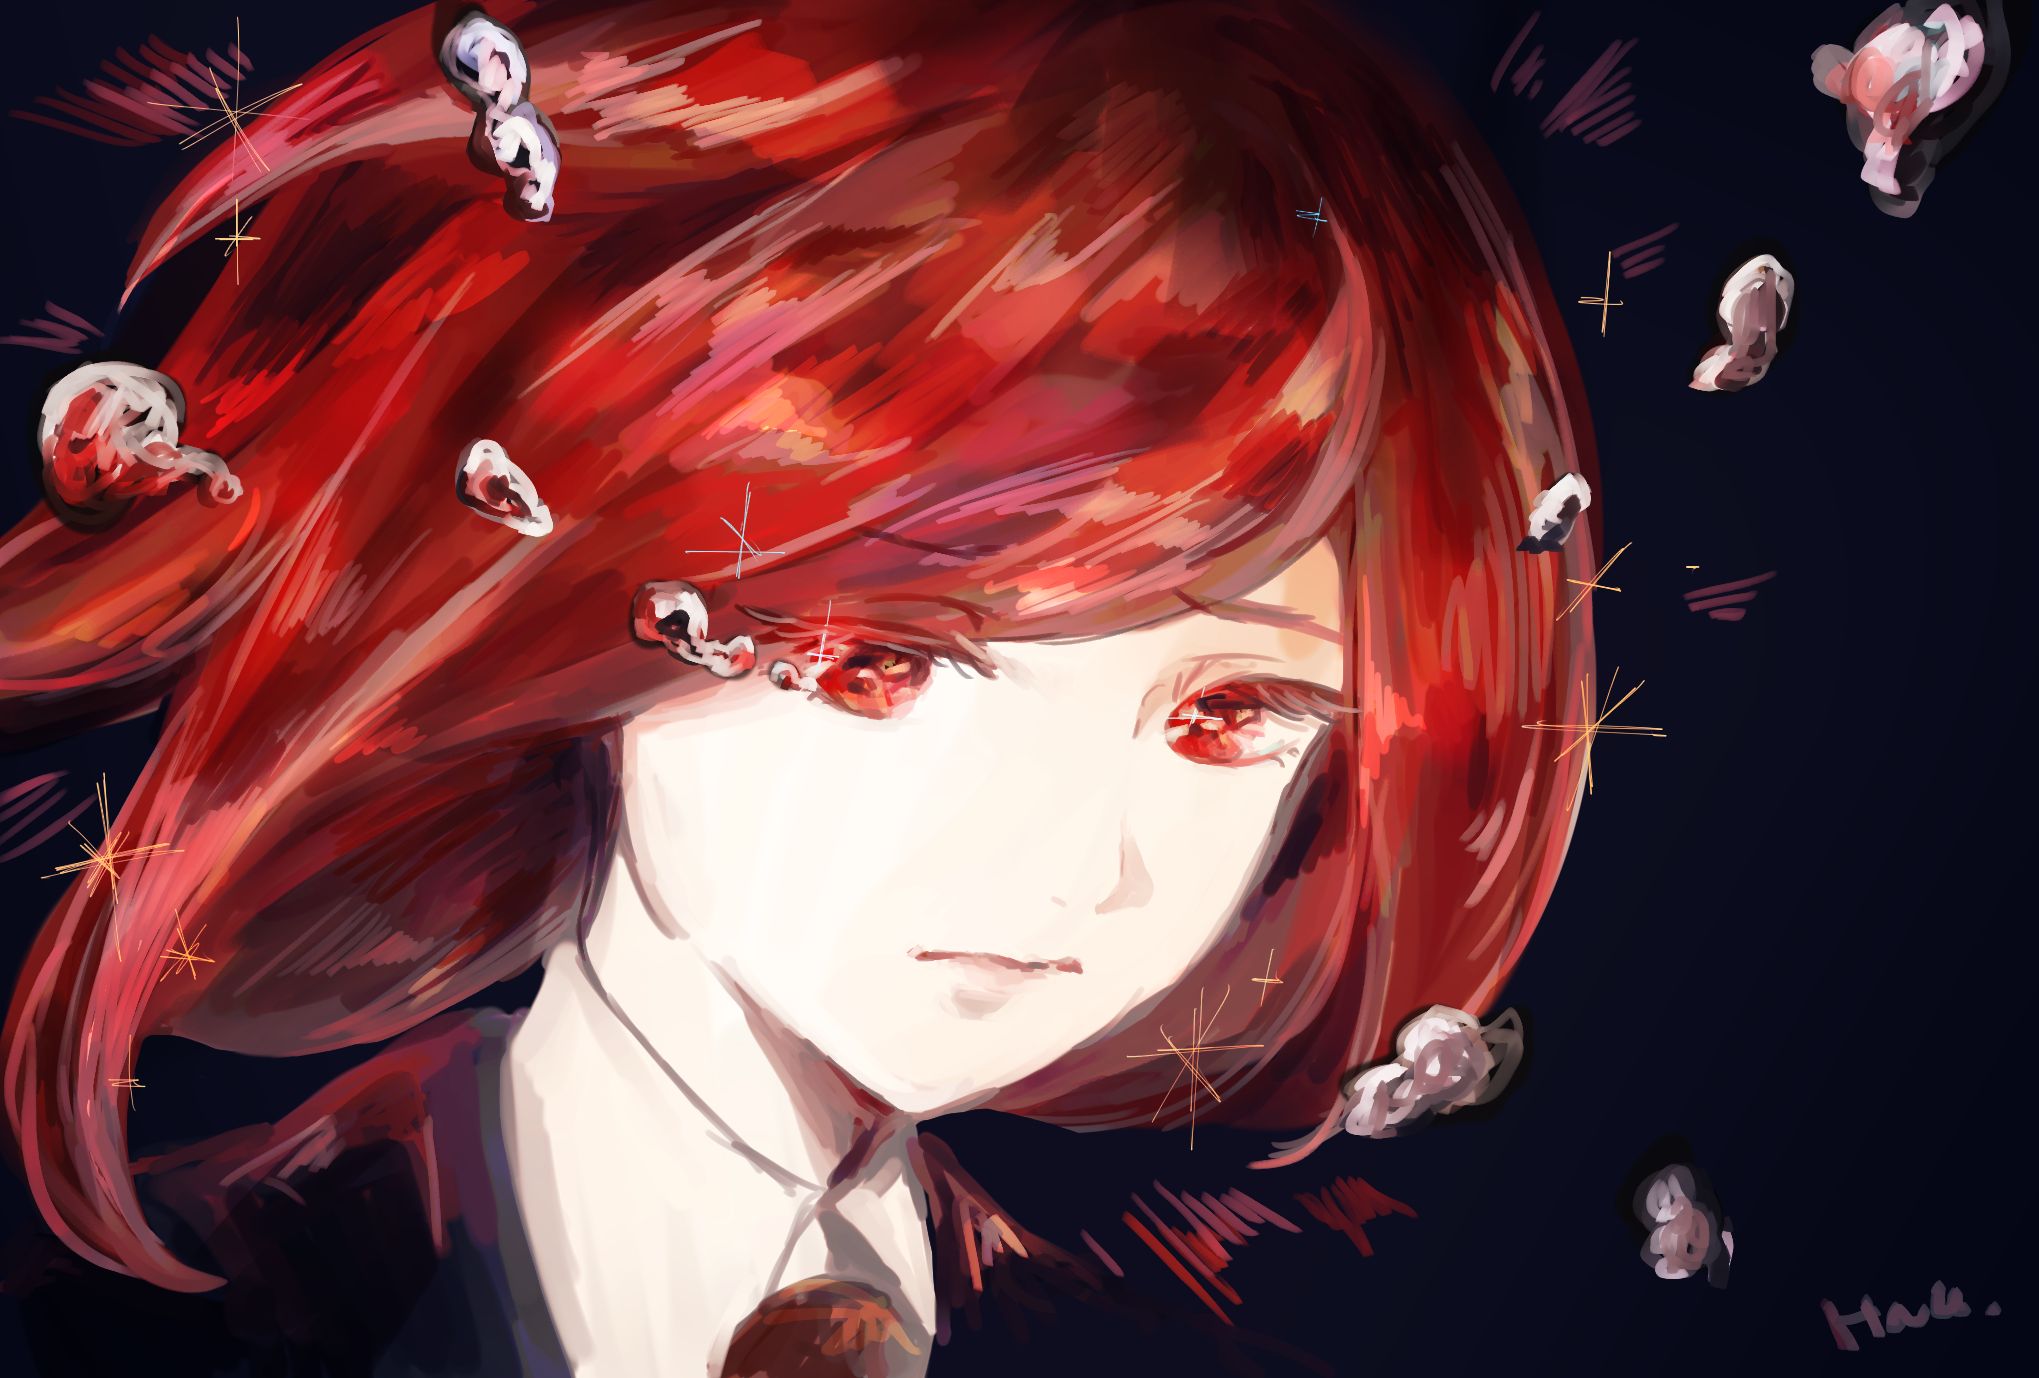 Art, curious, Cinnabar, Houseki no kuni, 720x1280 wallpaper | Profile  picture, Art, Anime art girl